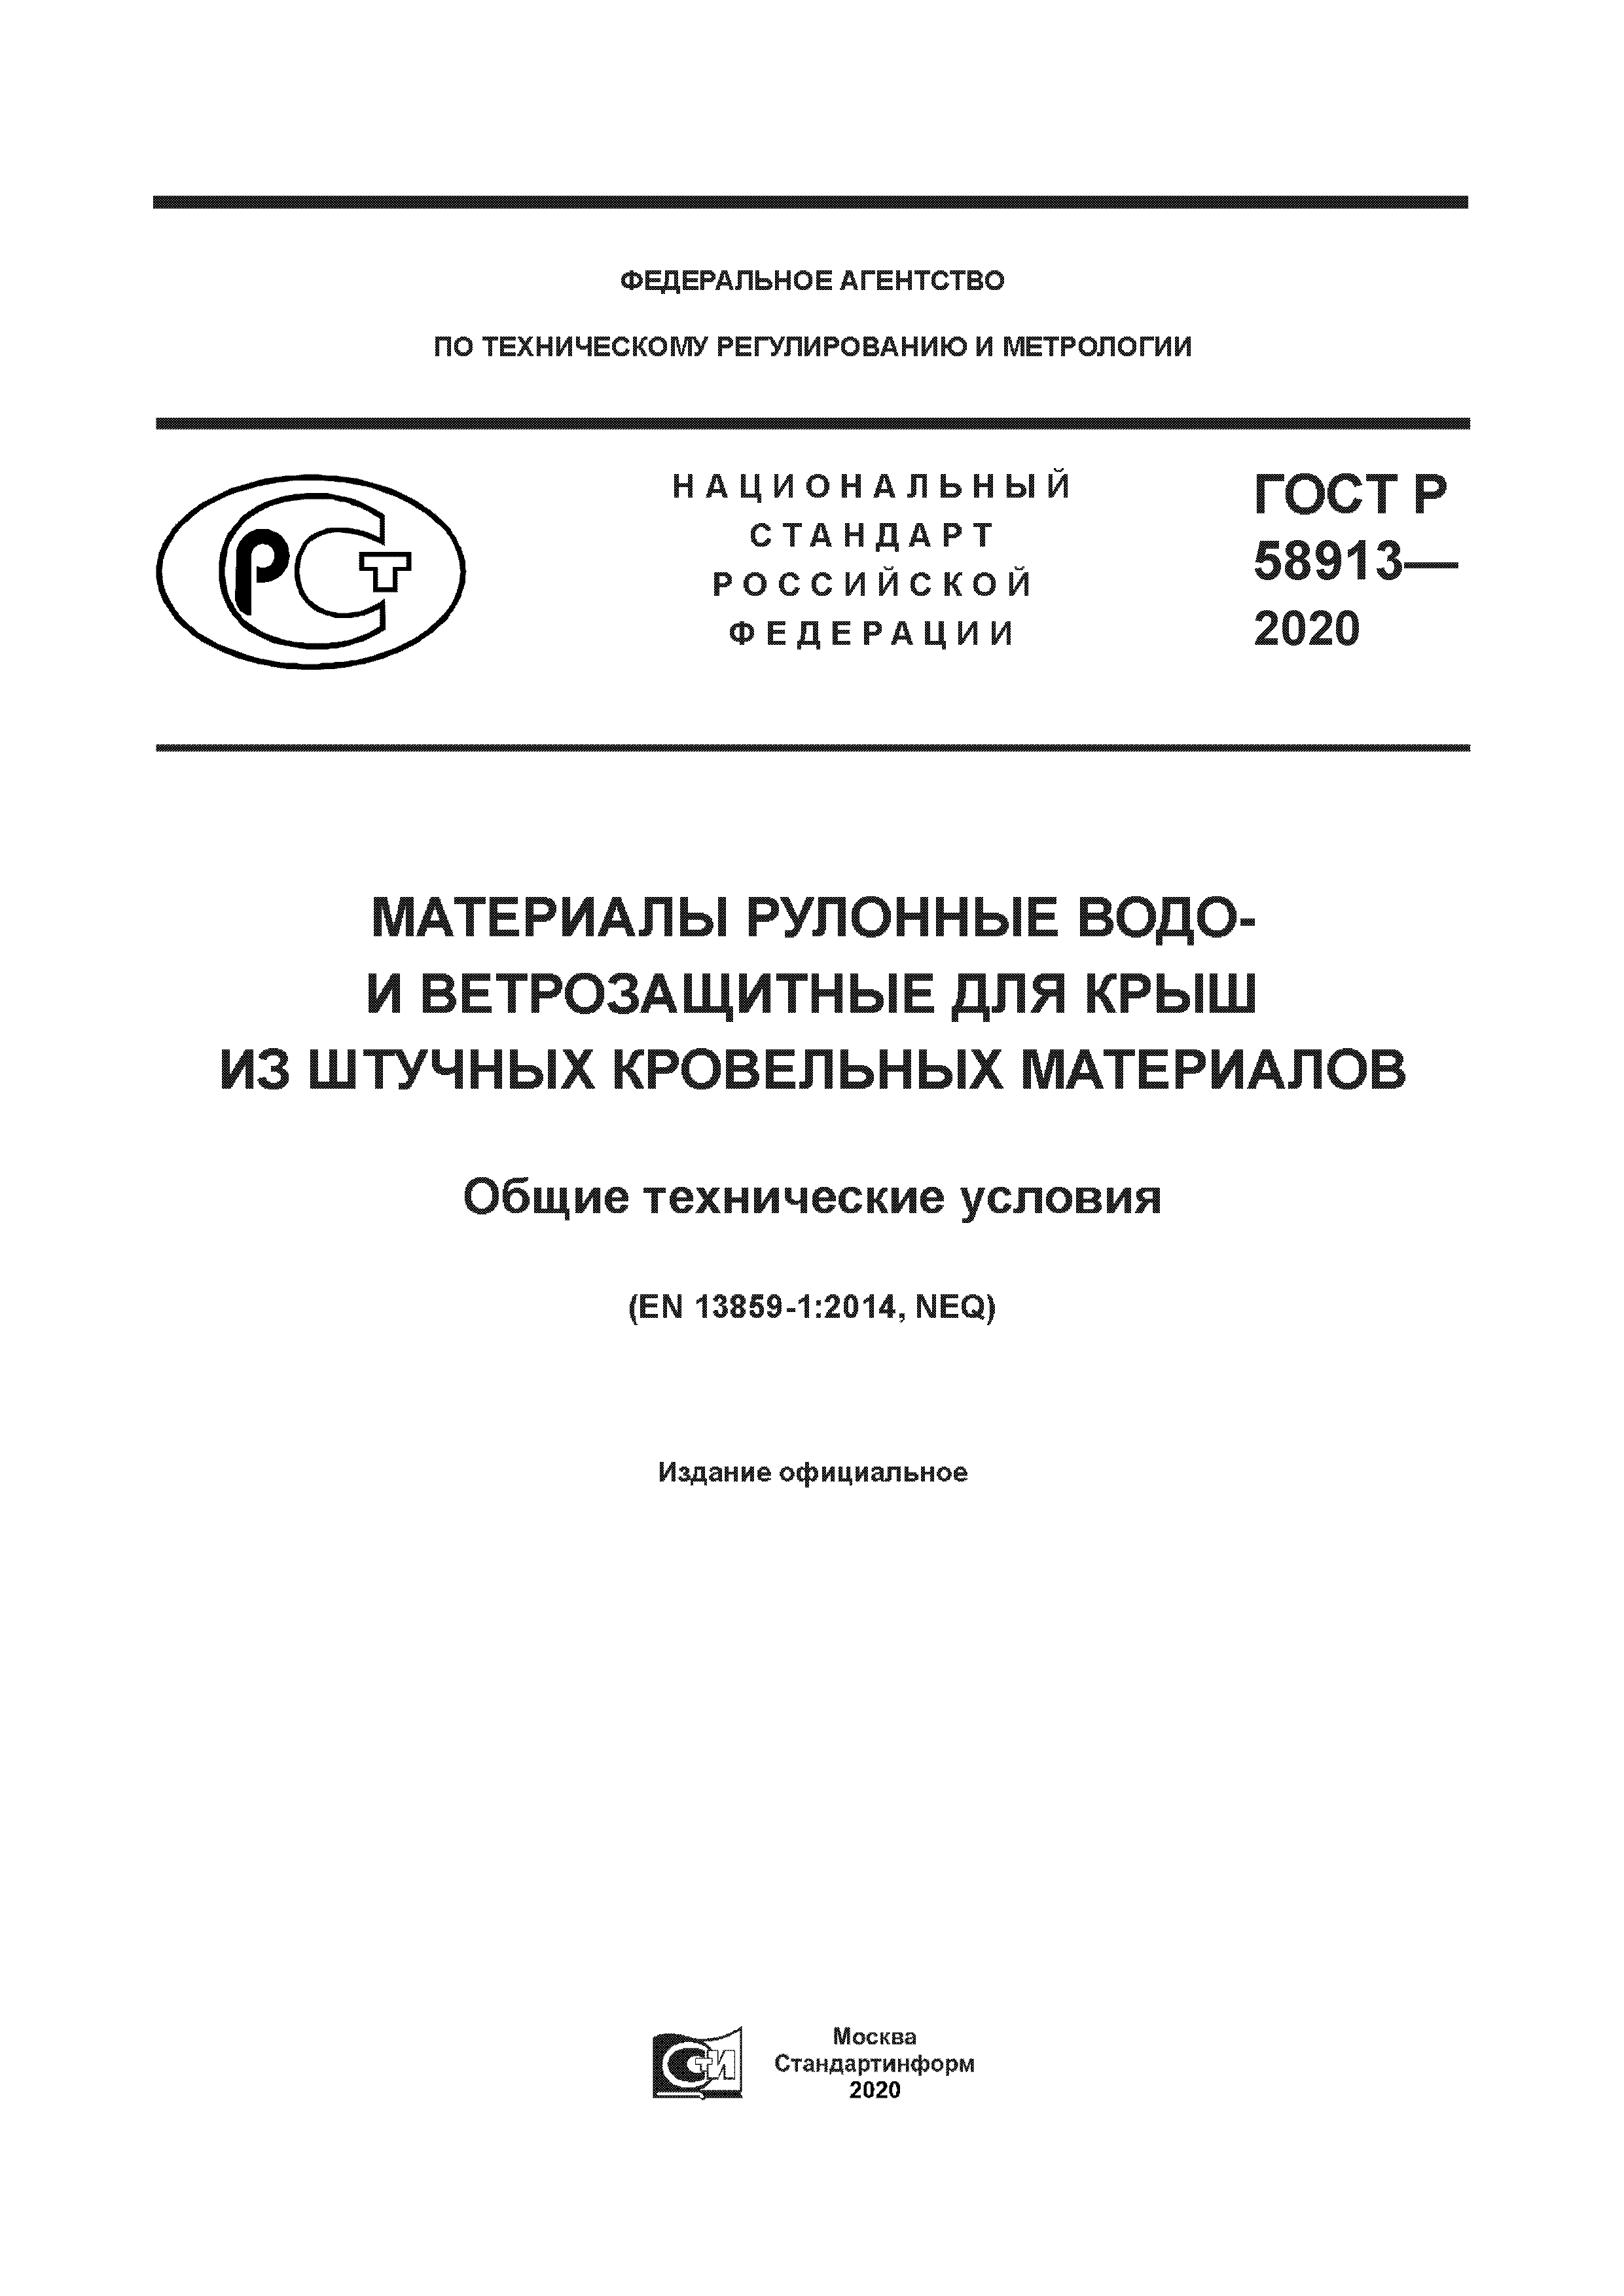 ГОСТ Р 58913-2020